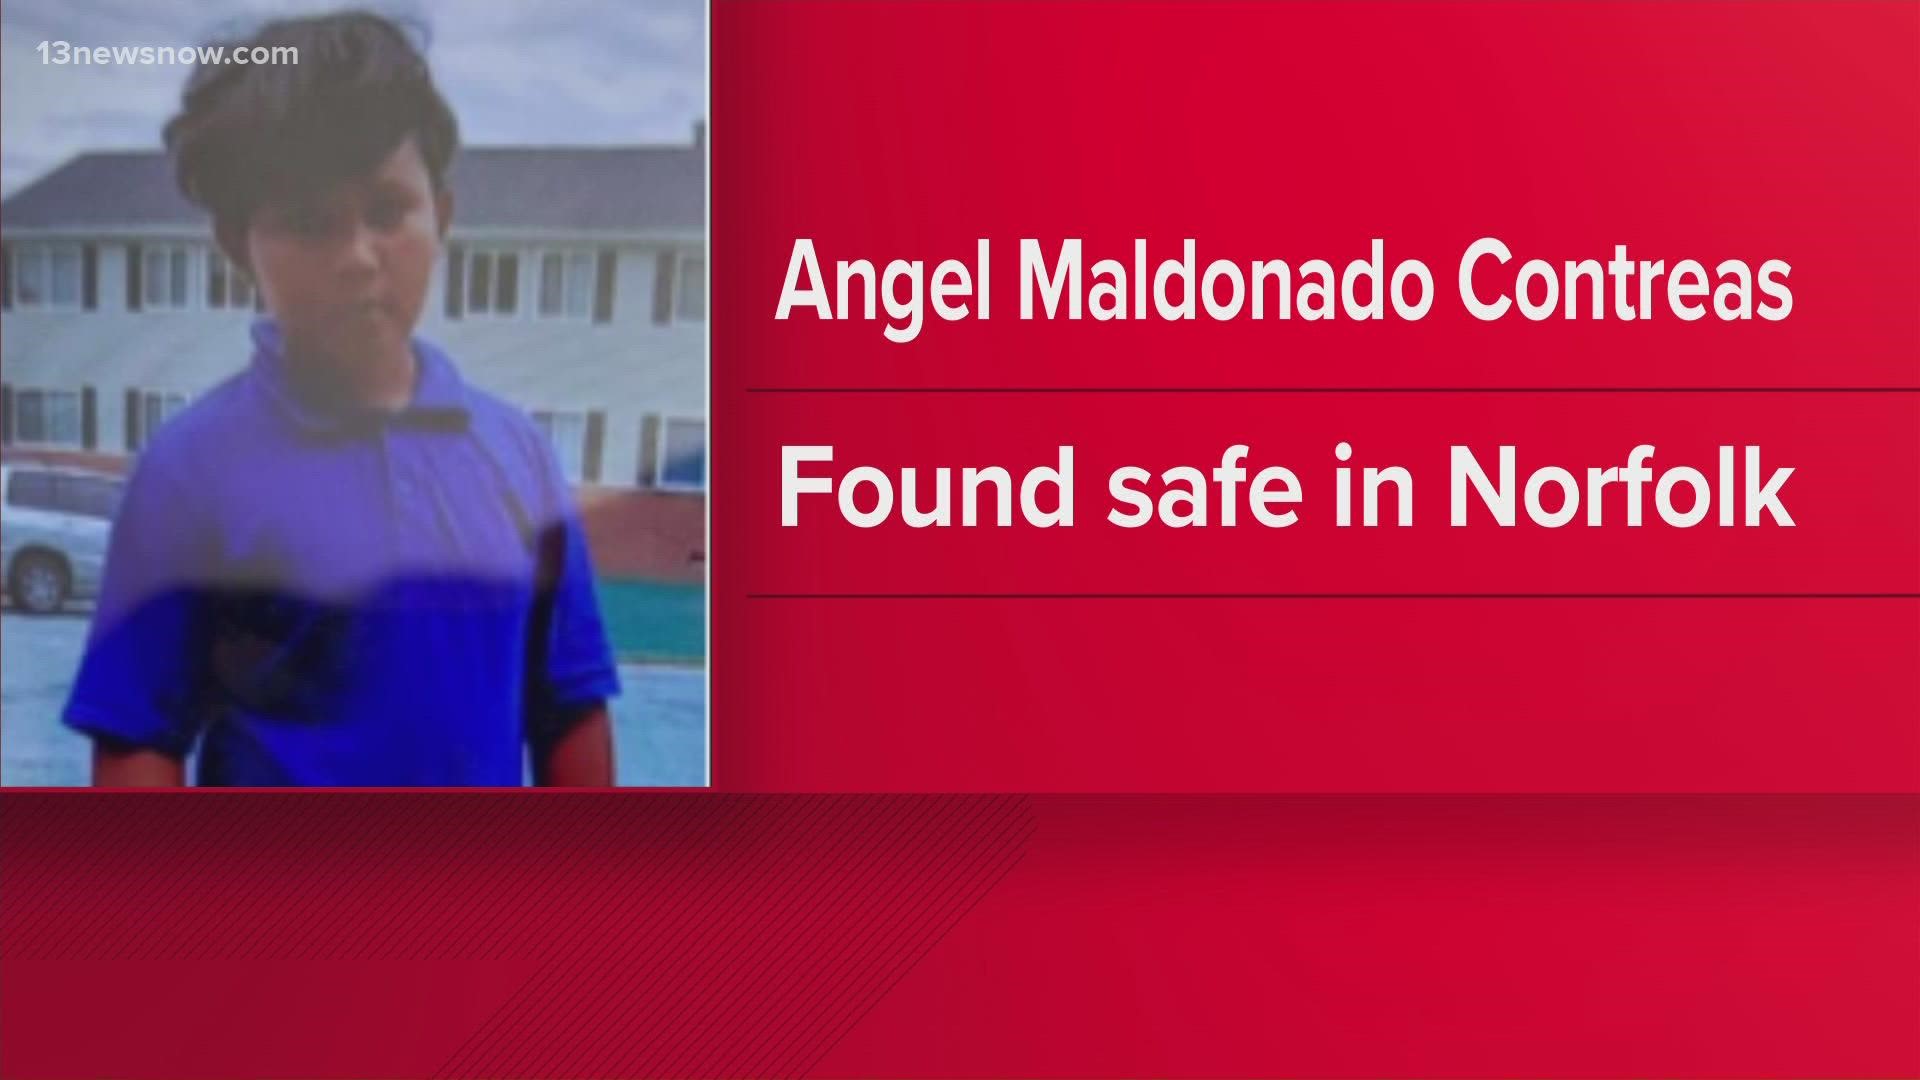 Virginia Beach police said 11-year-old Angel Maldonado Contreas was found safe in Norfolk Friday night.